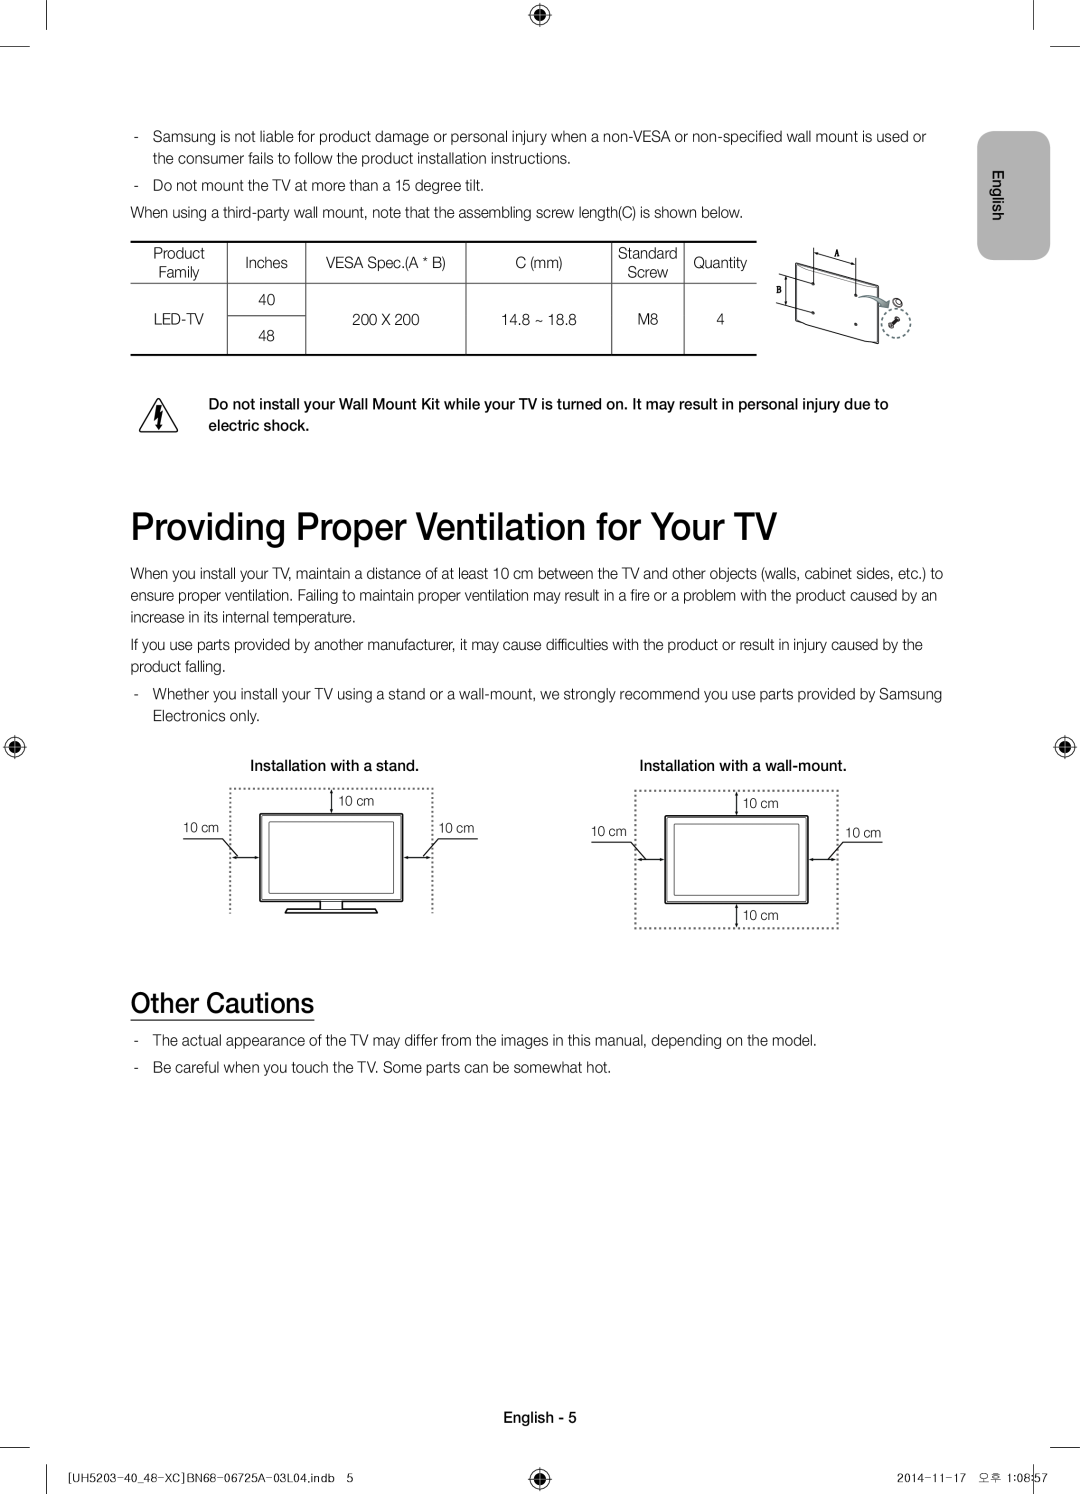 Samsung UE48H5203AWXXC, UE40H5203AWXXC manual Providing Proper Ventilation for Your TV, Other Cautions 